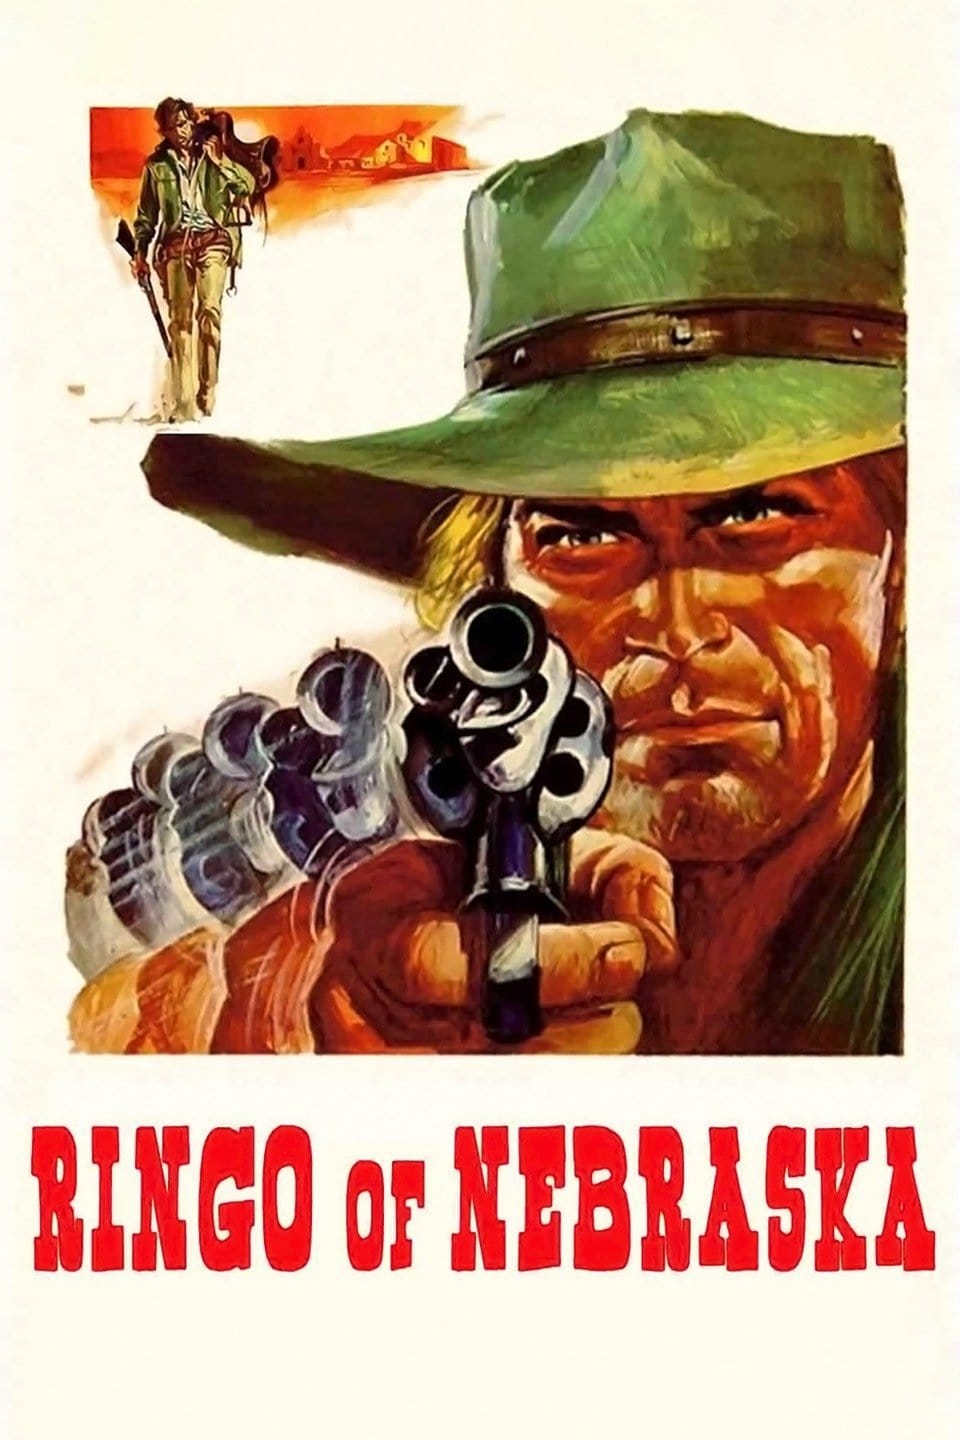 Gunman Called Nebraska (1966)